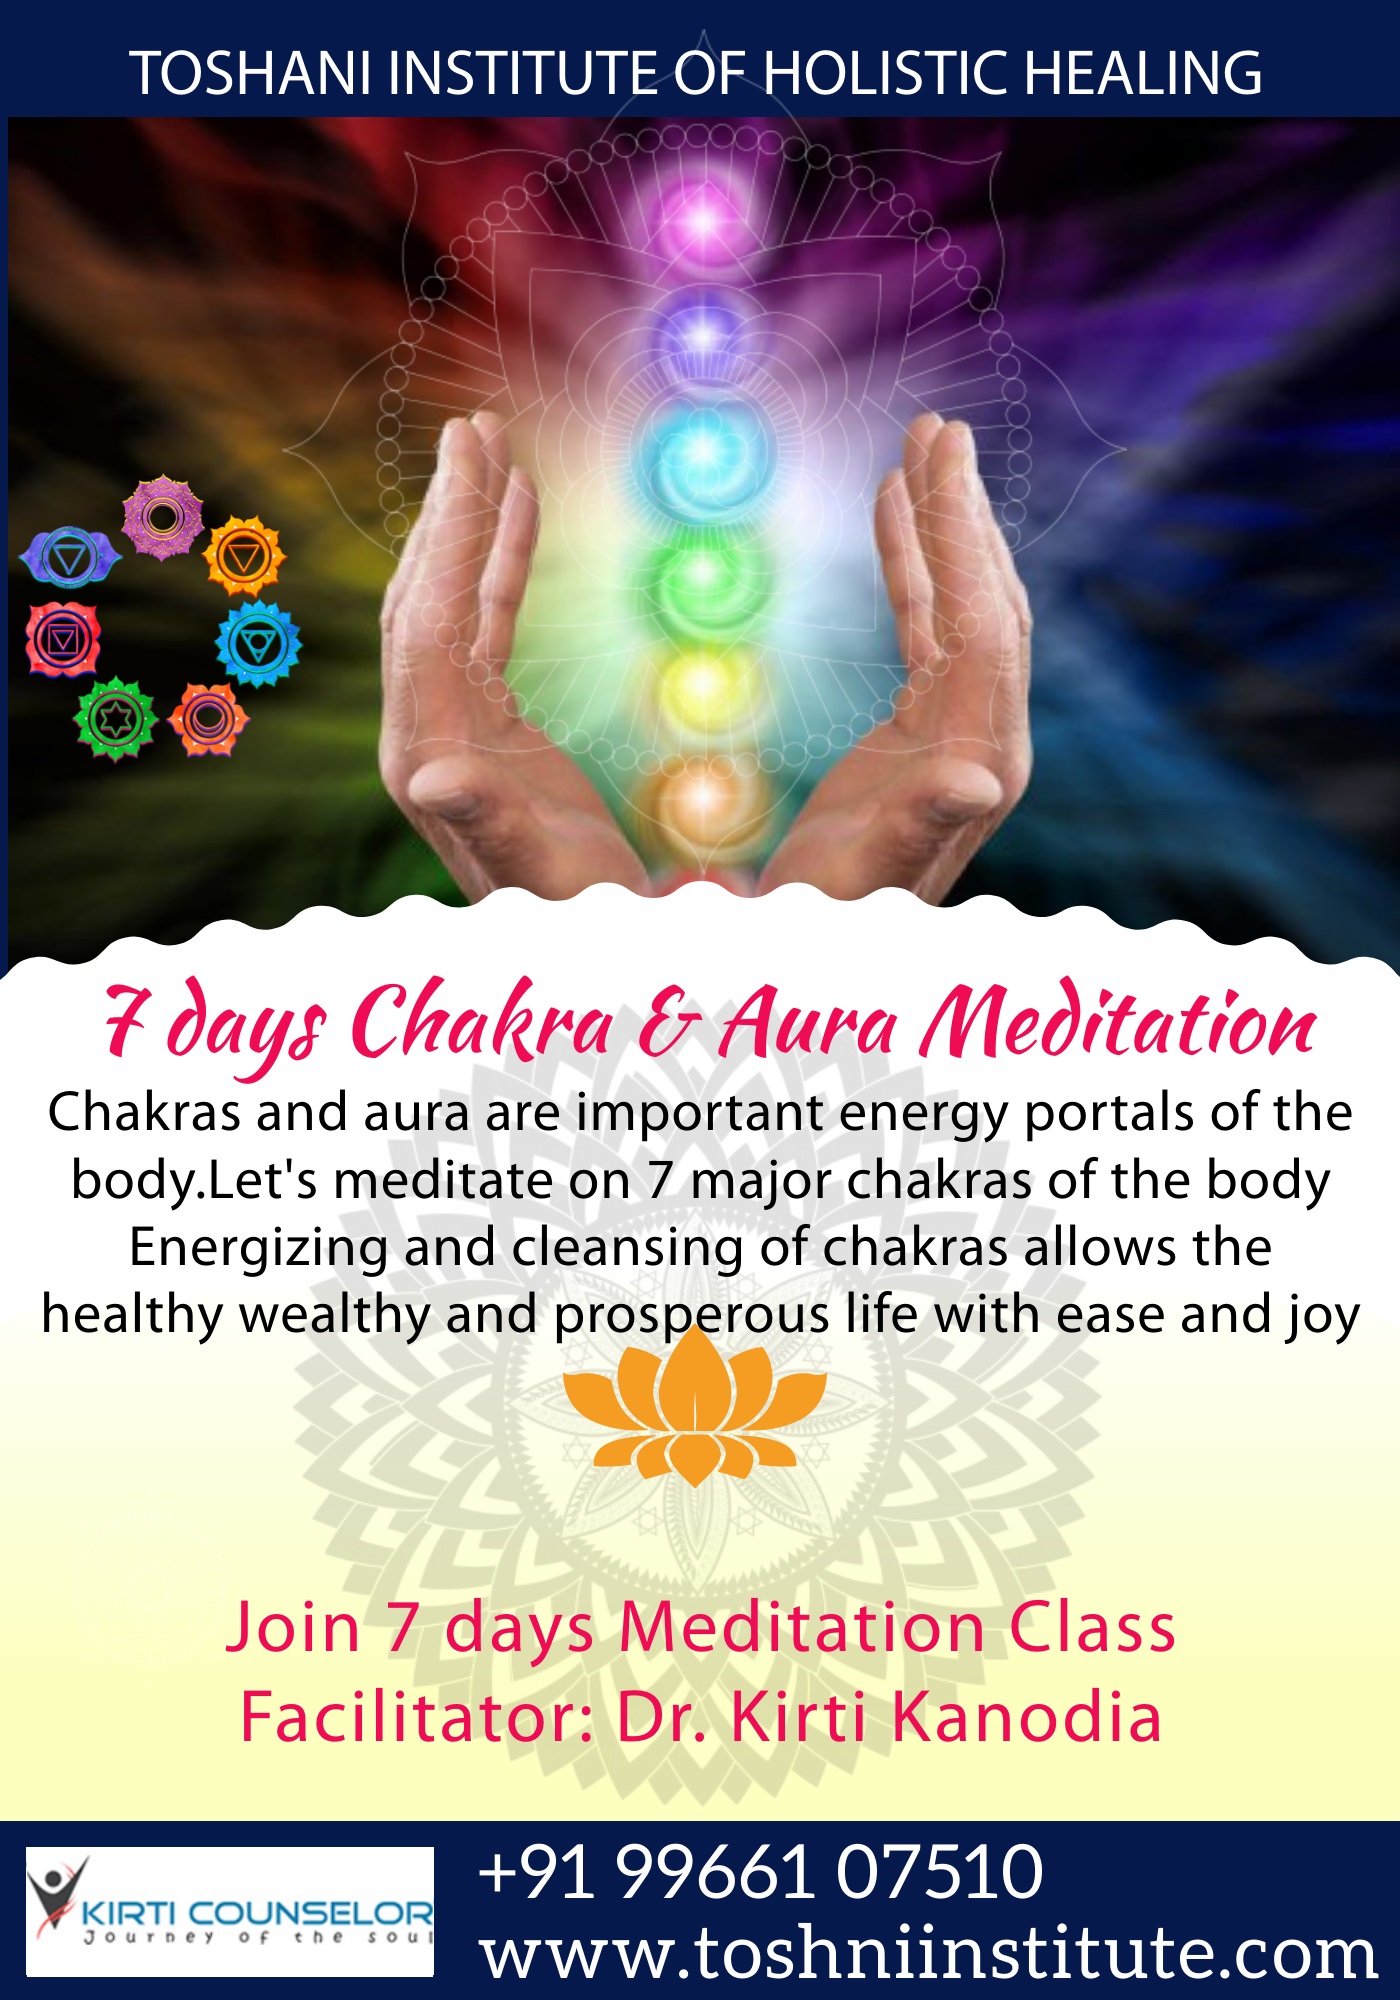 Chakra and Aura Meditation by Dr. Kirti Kanodia - Coimbatore